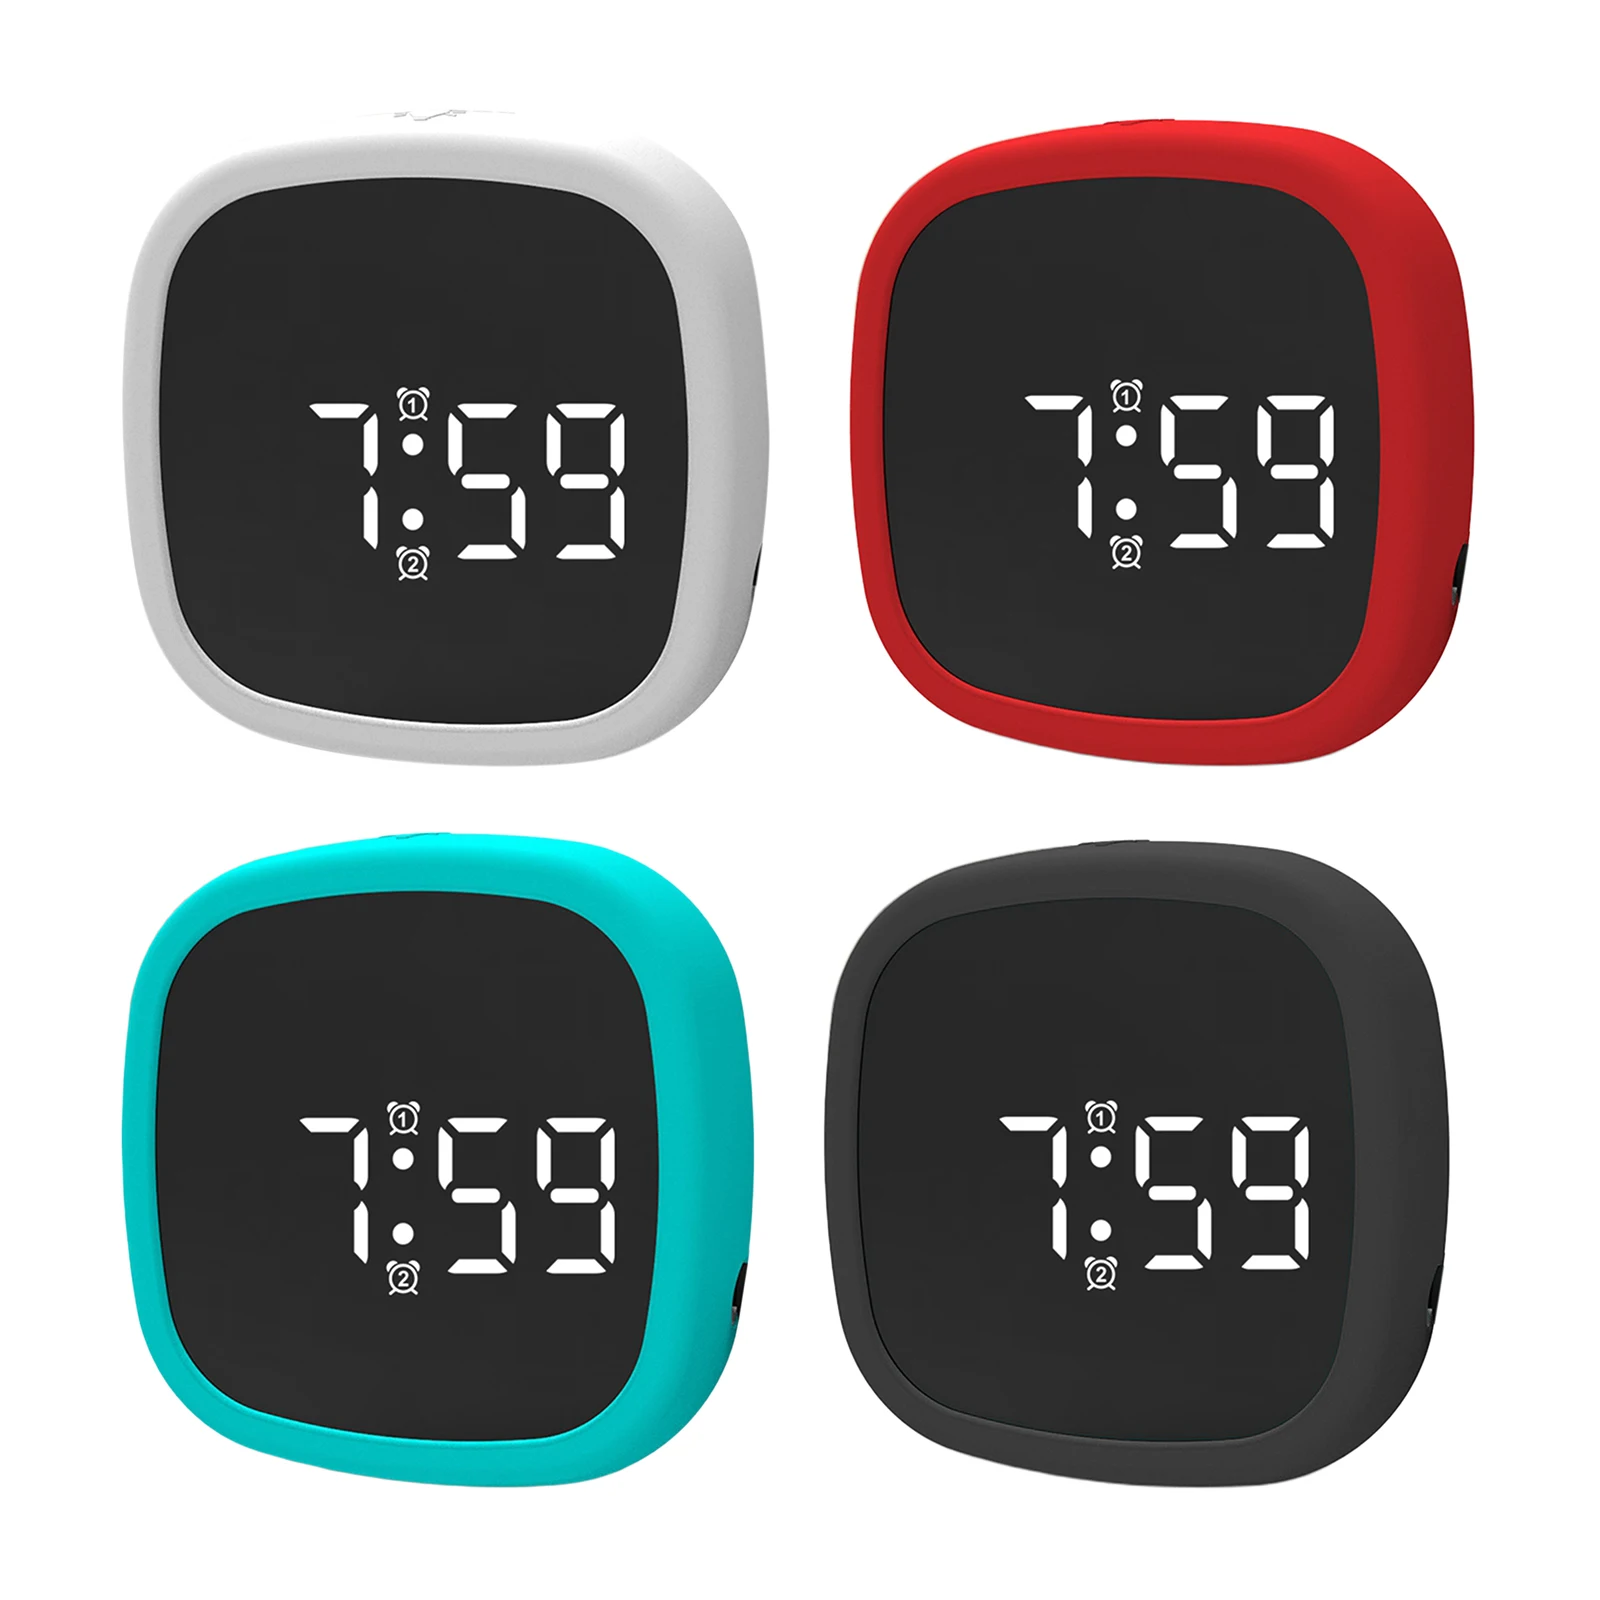 

Digital Alarm LED Display Voice-activated 4 Level Brightness Setting Alarm Clock Brightness Adjustable Snooze Function